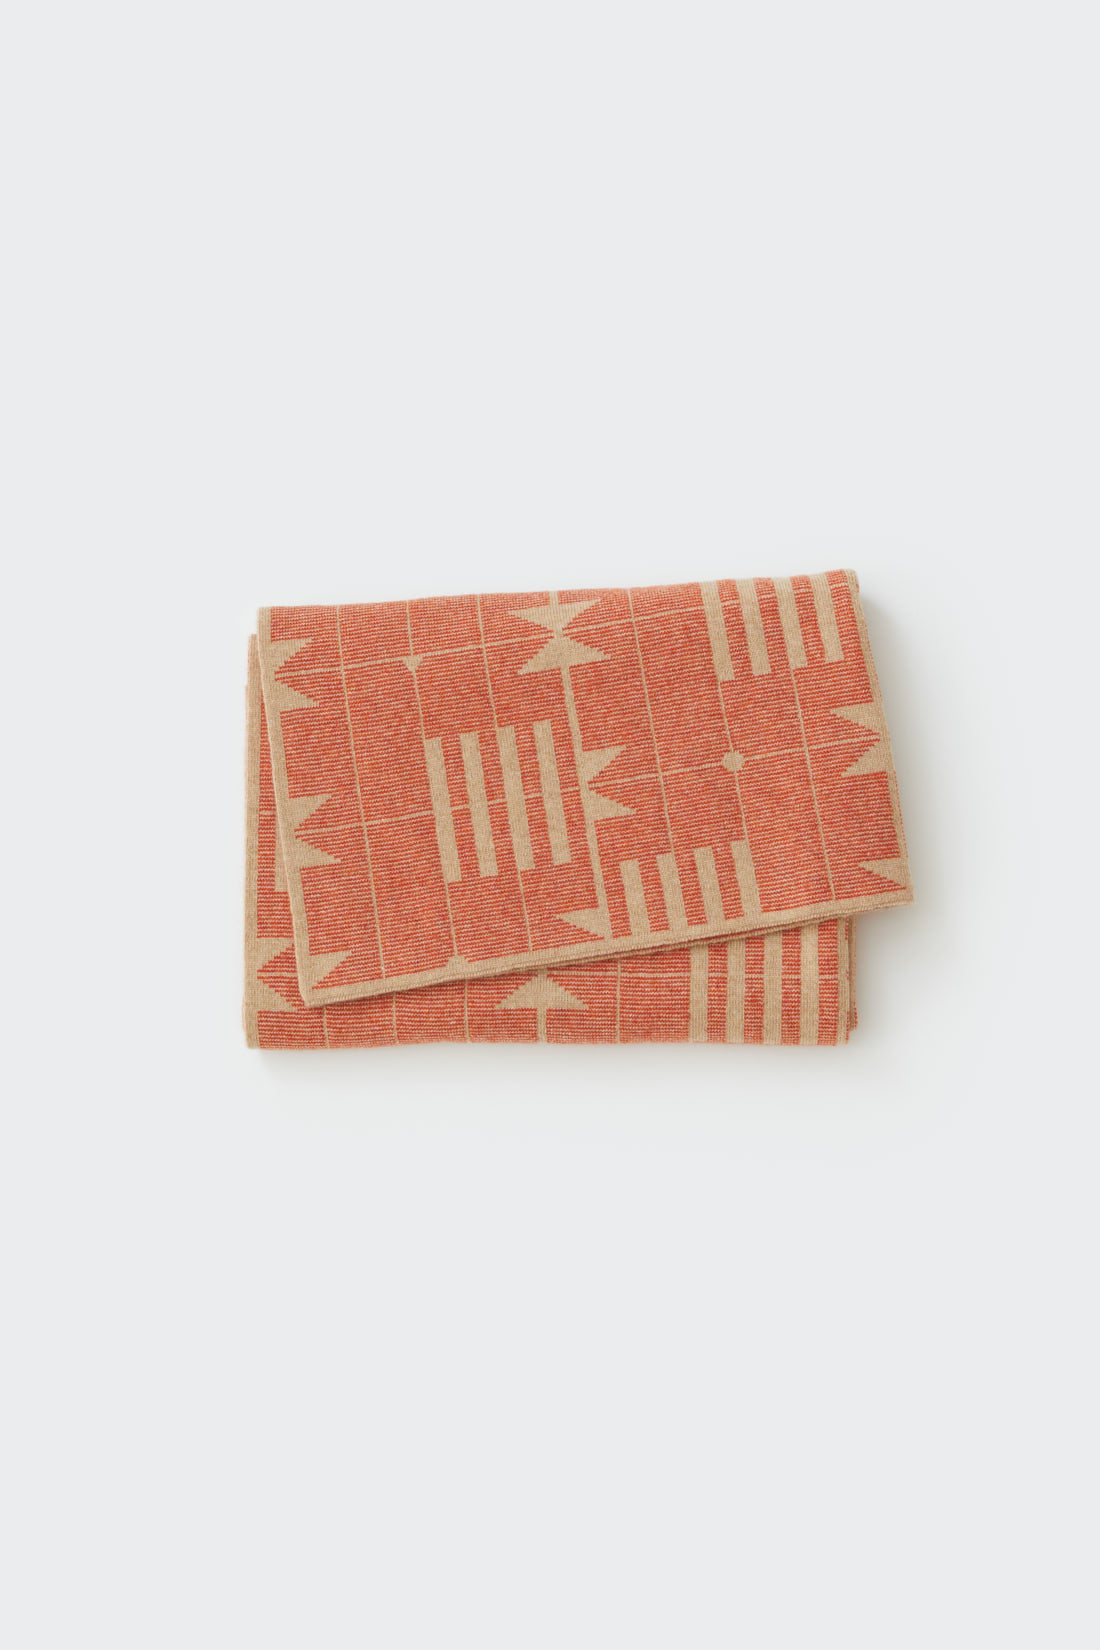 Mini Blanket "Dovetail" - Barley + Rust